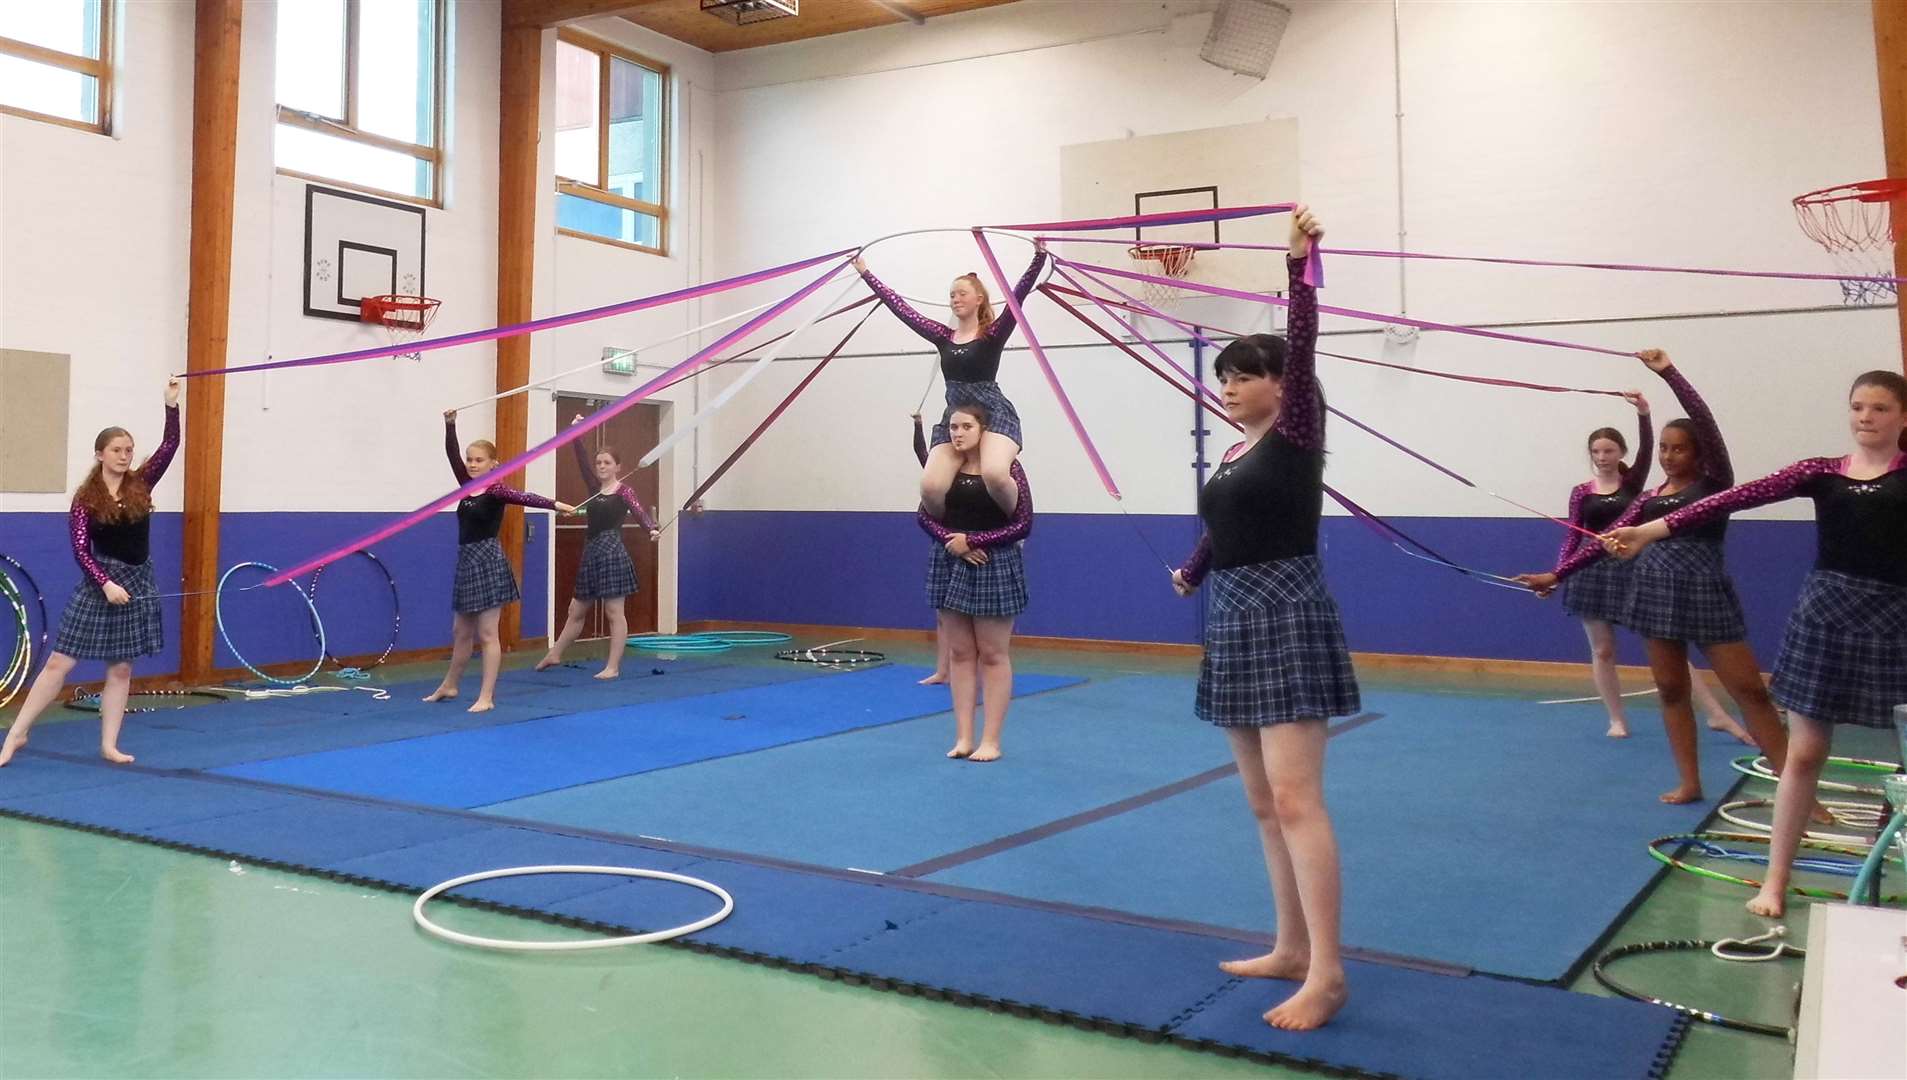 Rhythmic gymnastics showing their skills during the display and presentation evening.